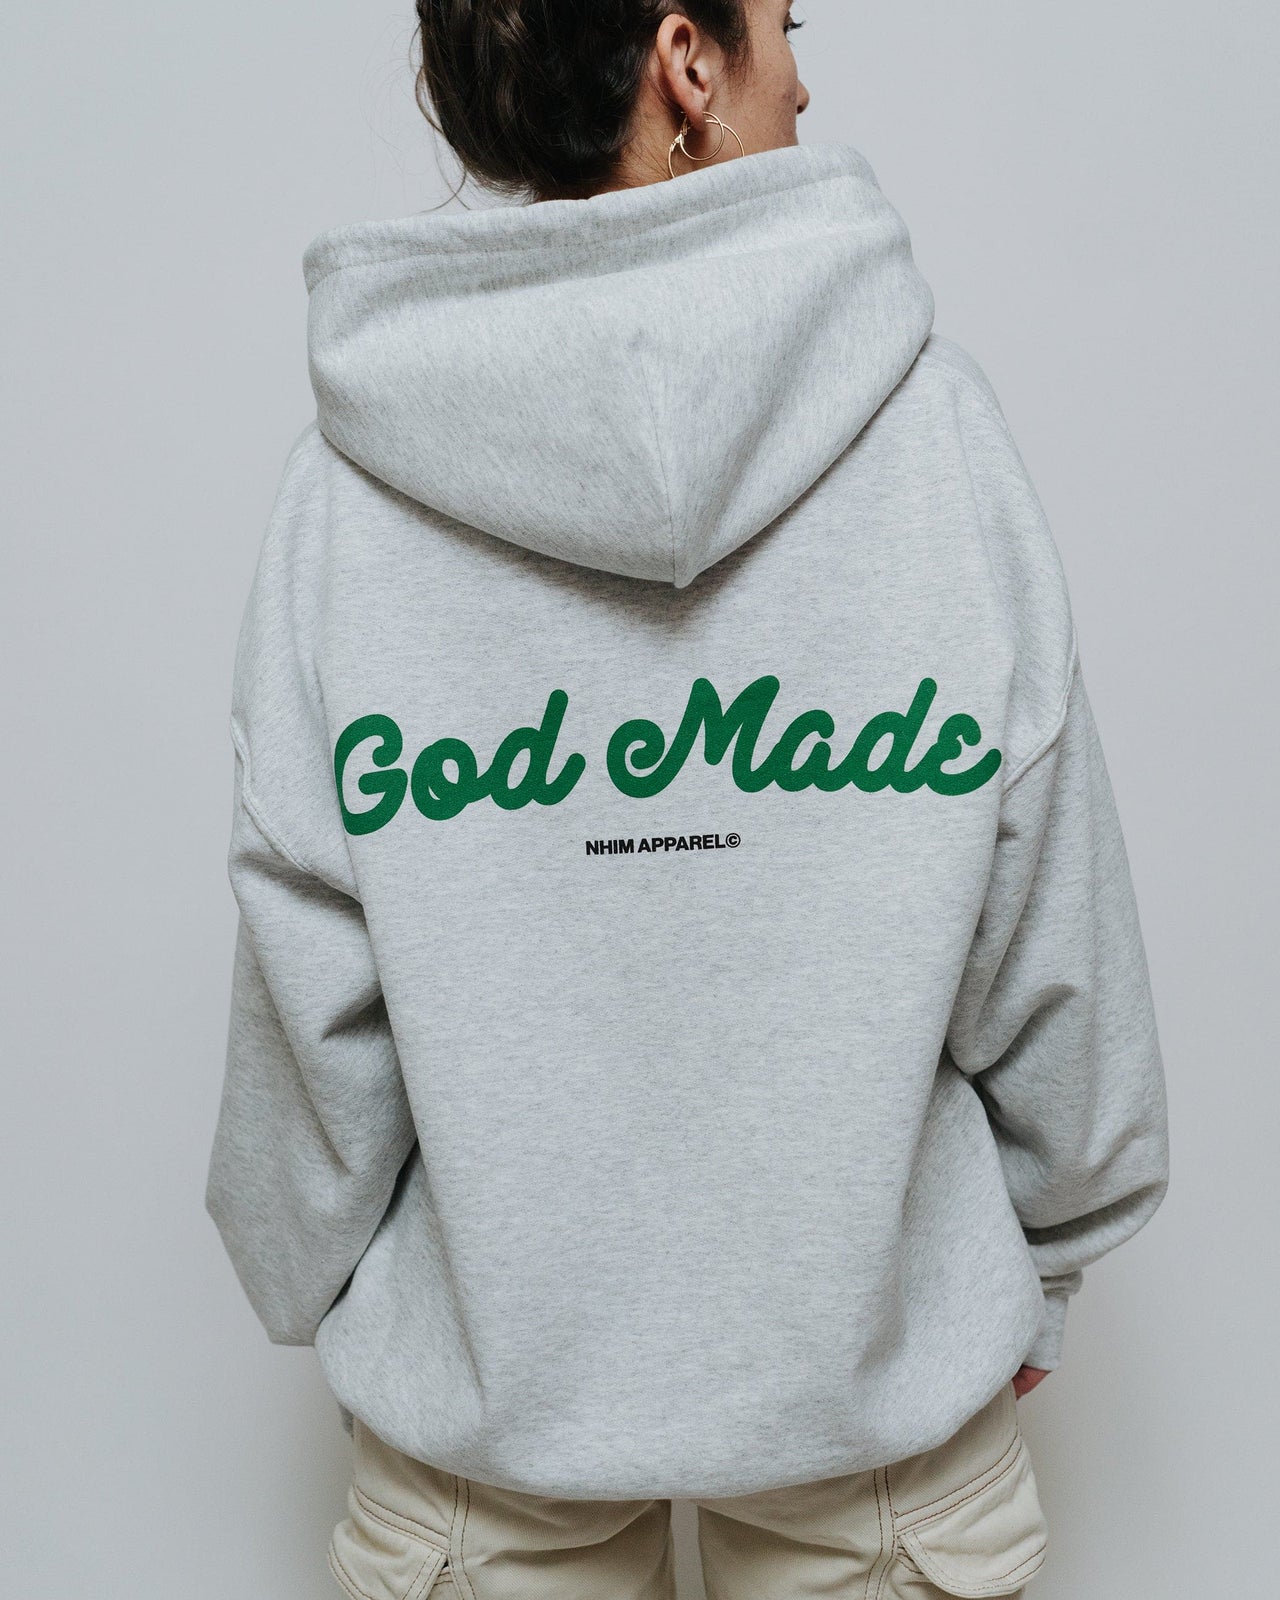 GOD MADE Creation Hoodie Sweatshirt in Ash by NHIM Apparel Christian clothing brand